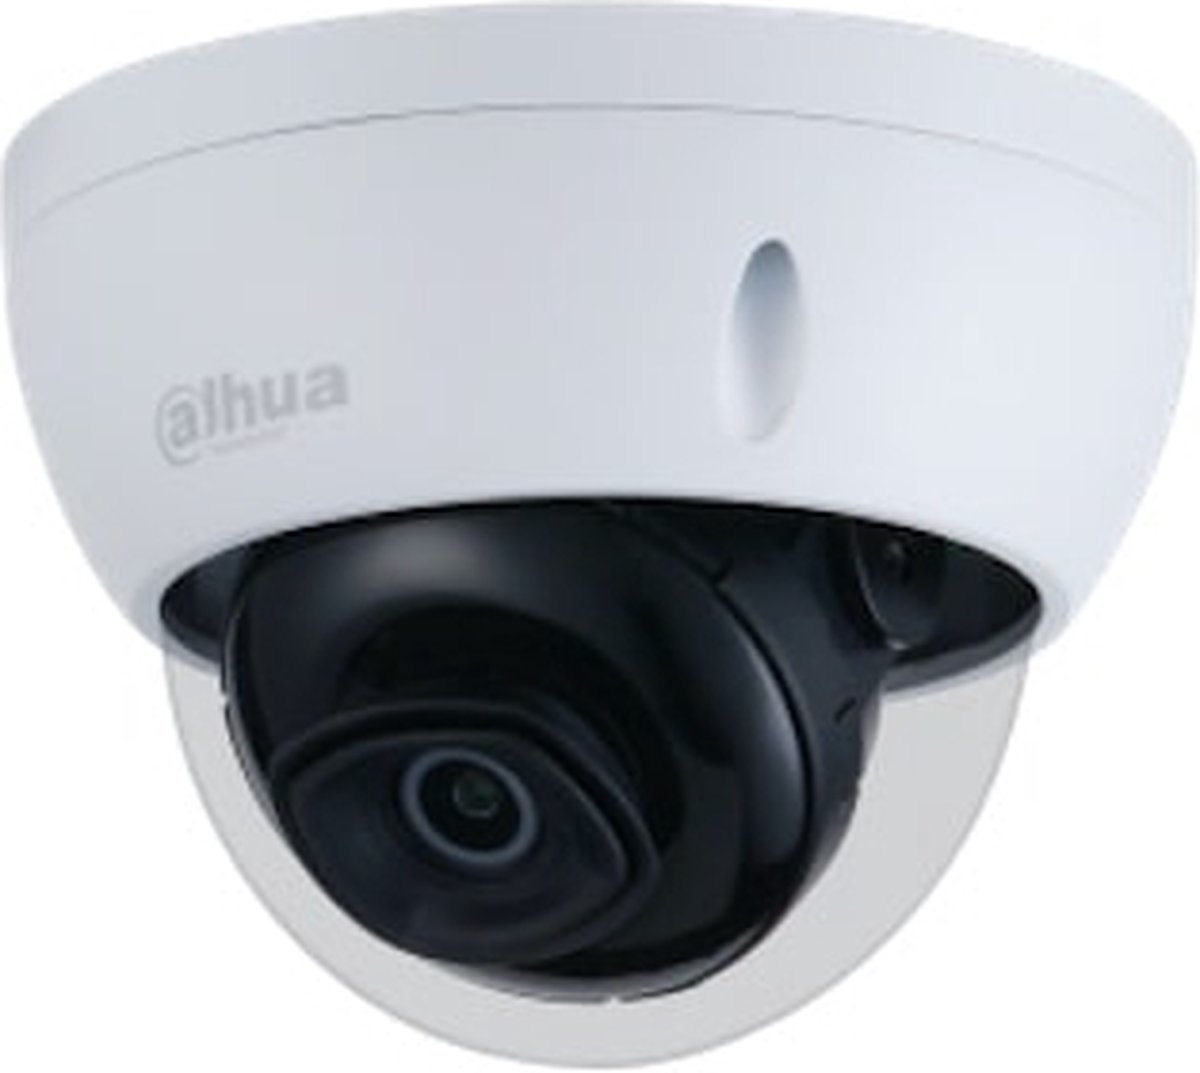 Dahua IPC-HDBW3441E-AS Full HD 4MP Starlight AI buiten dome camera met 50m IR, PoE, microSD, audio - Beveiligingscamera IP camera bewakingscamera camerabewaking veiligheidscamera beveiliging netwerk camera webcam